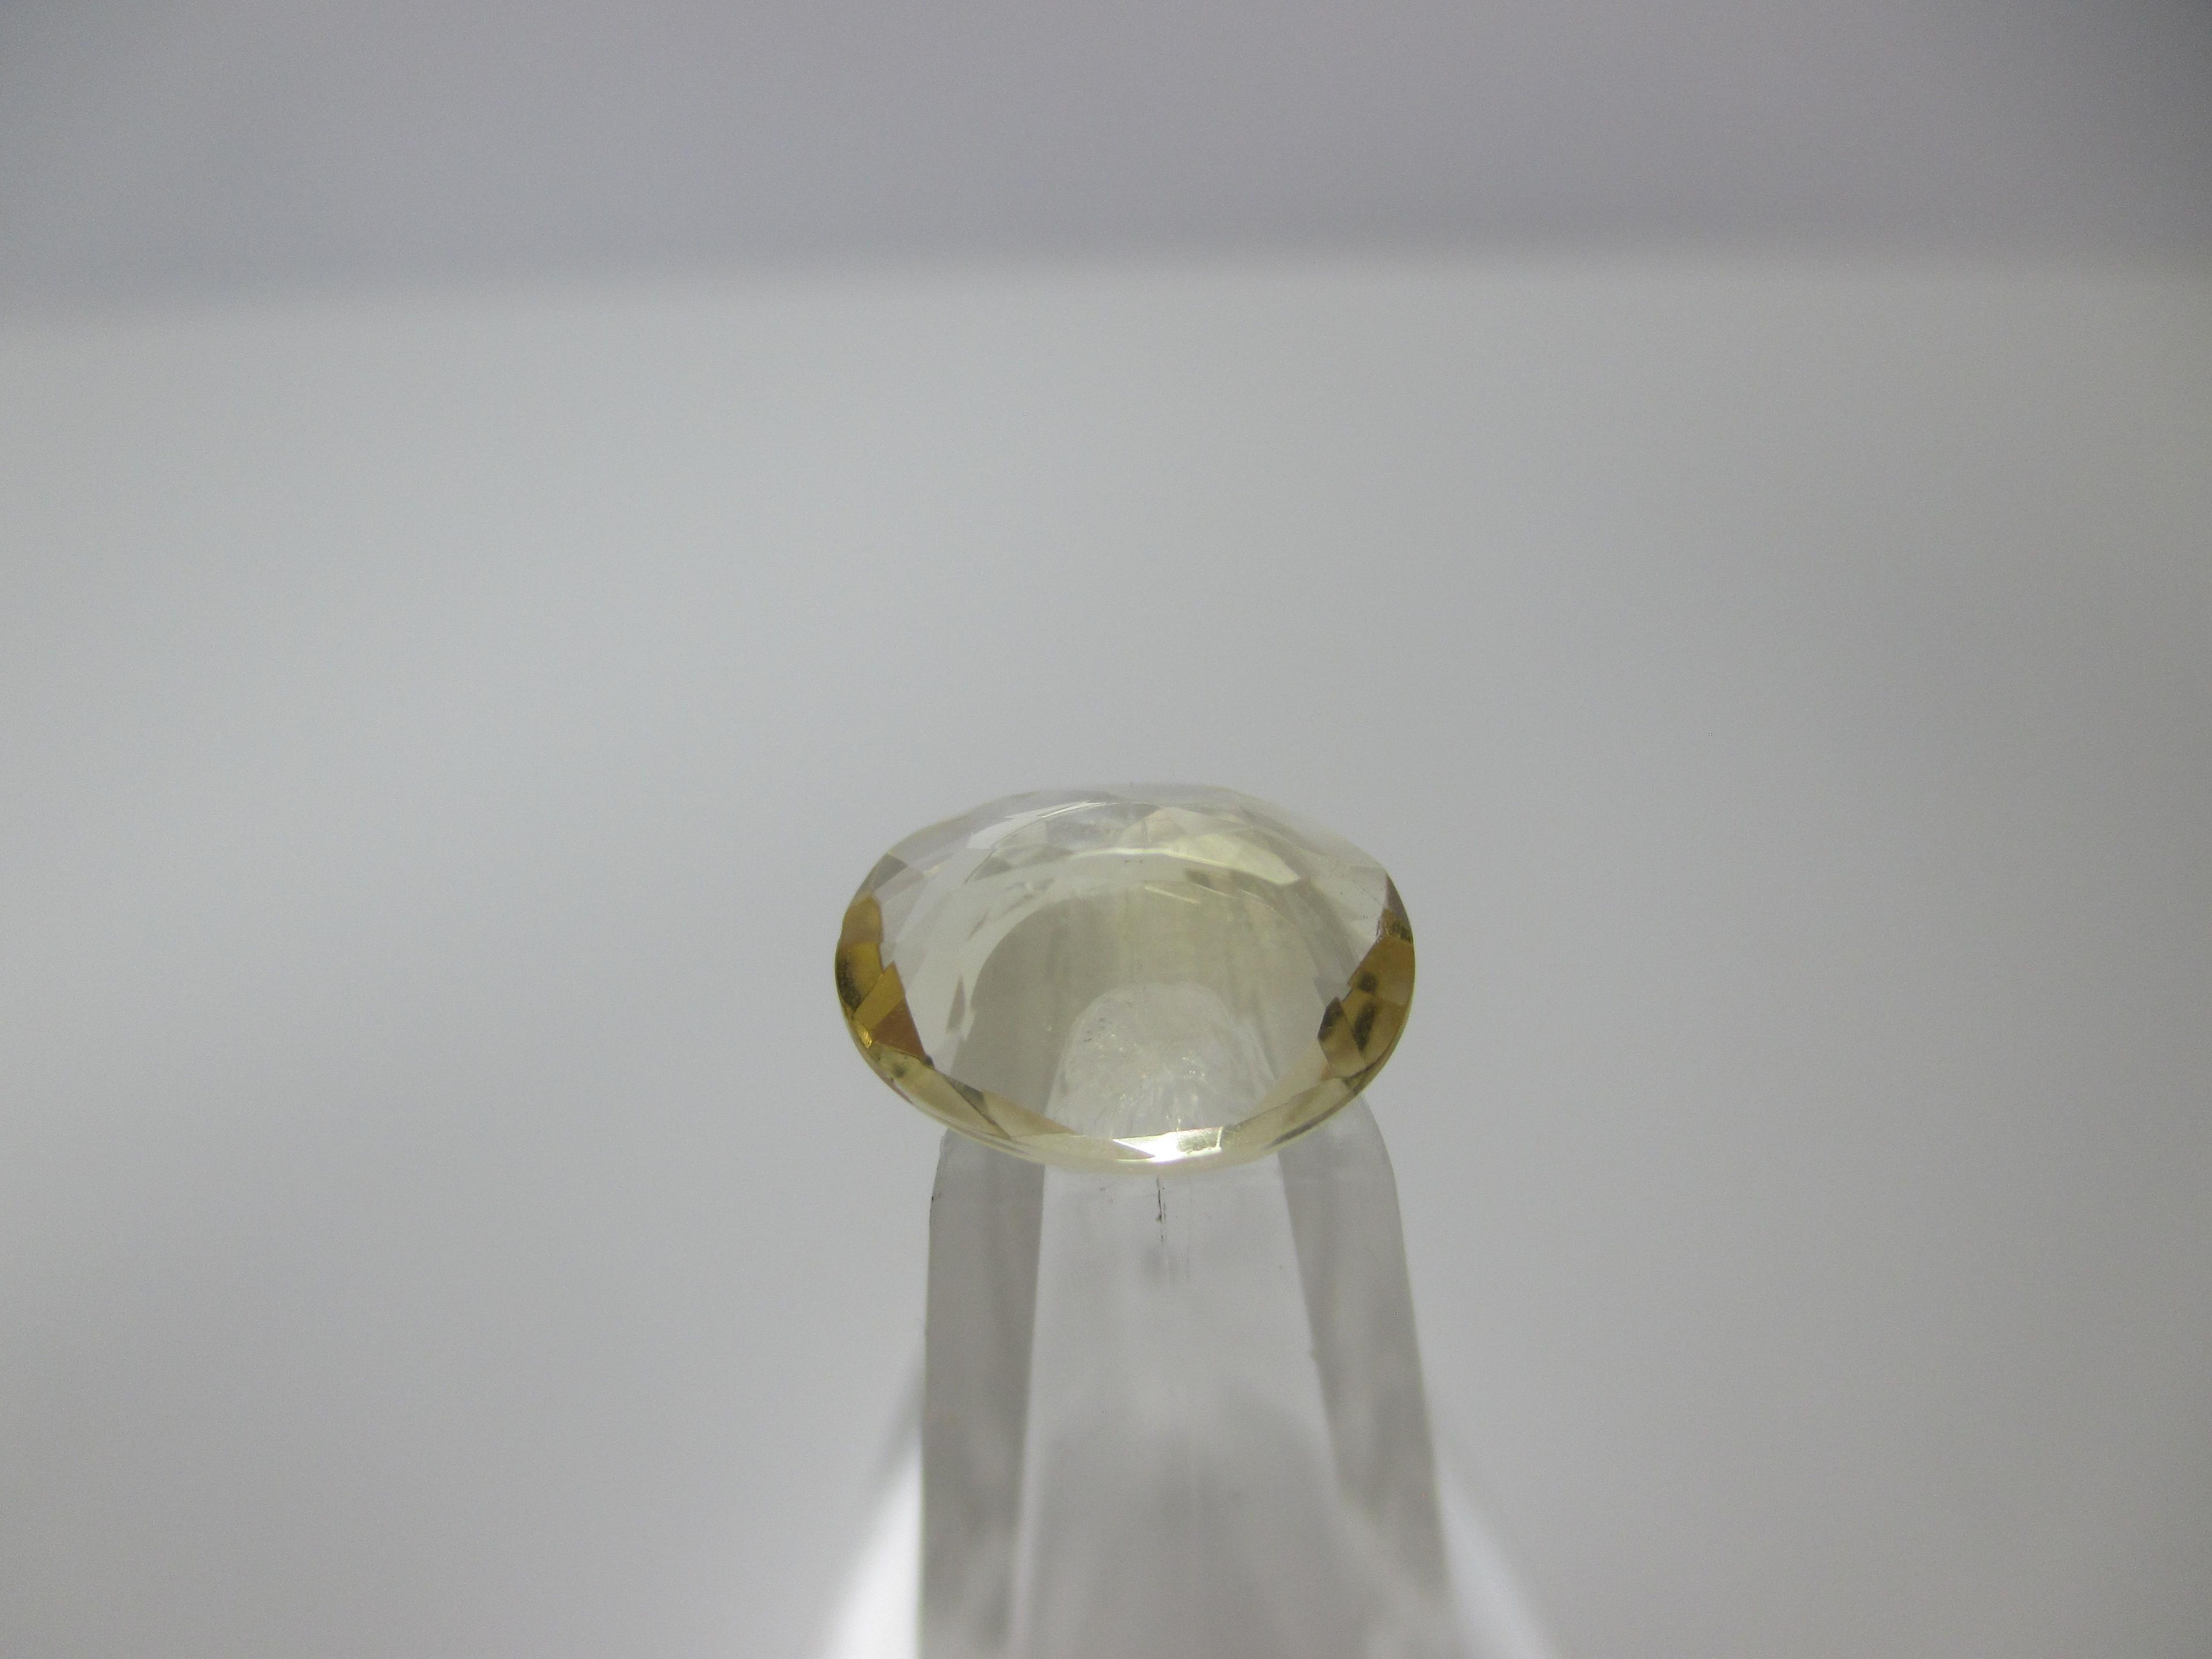 t-25 11mm x 8mm Lemon Citrine Oval Cut Gemstone 100% Natural IGA Tested